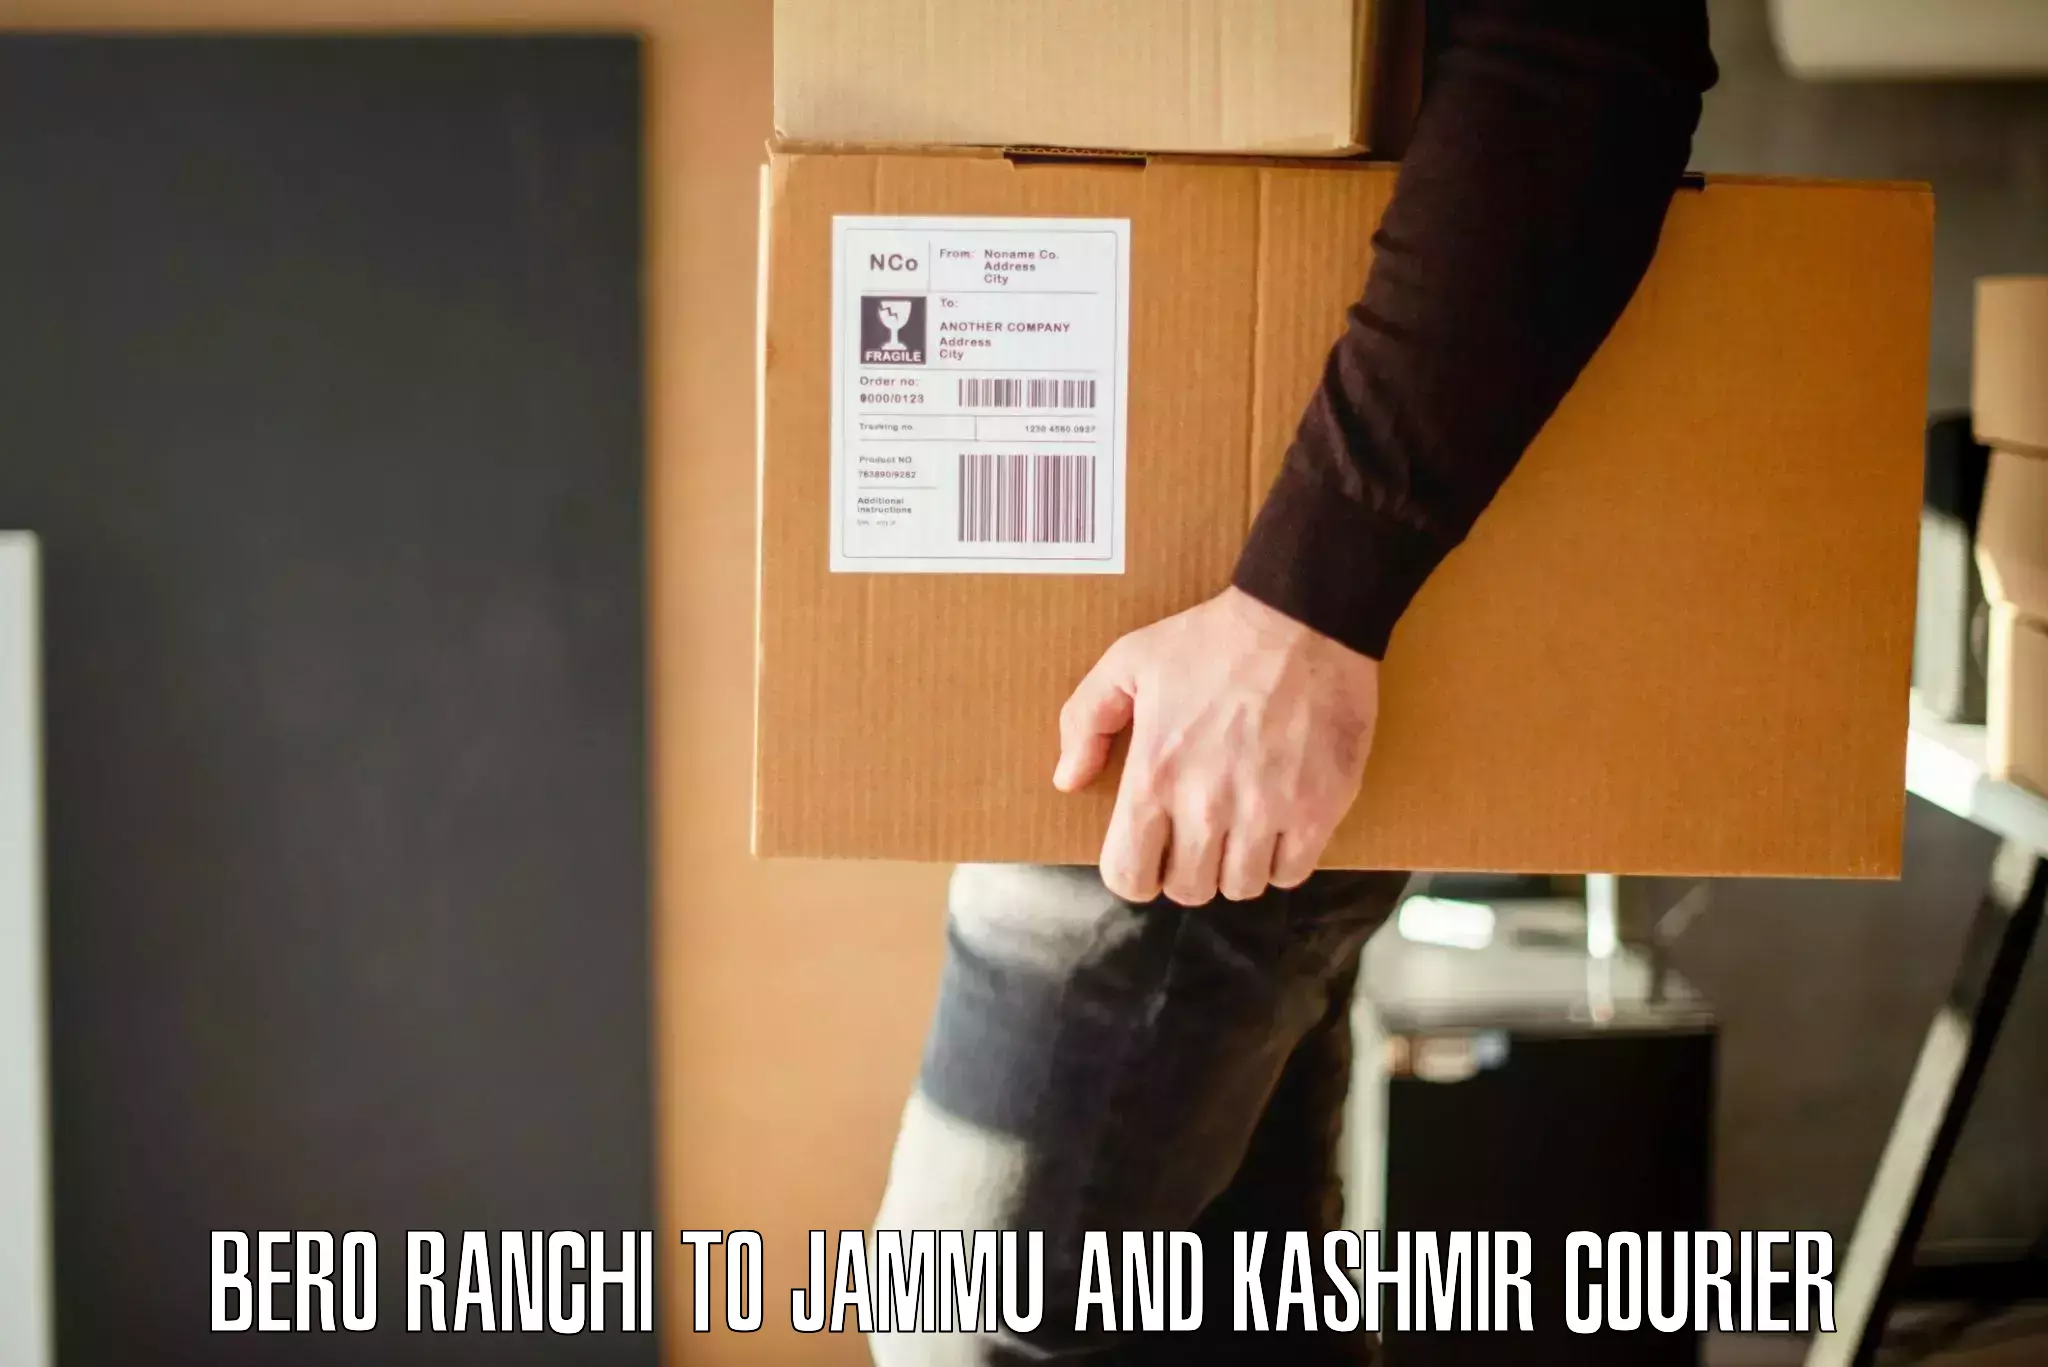 Professional moving company Bero Ranchi to Bandipur